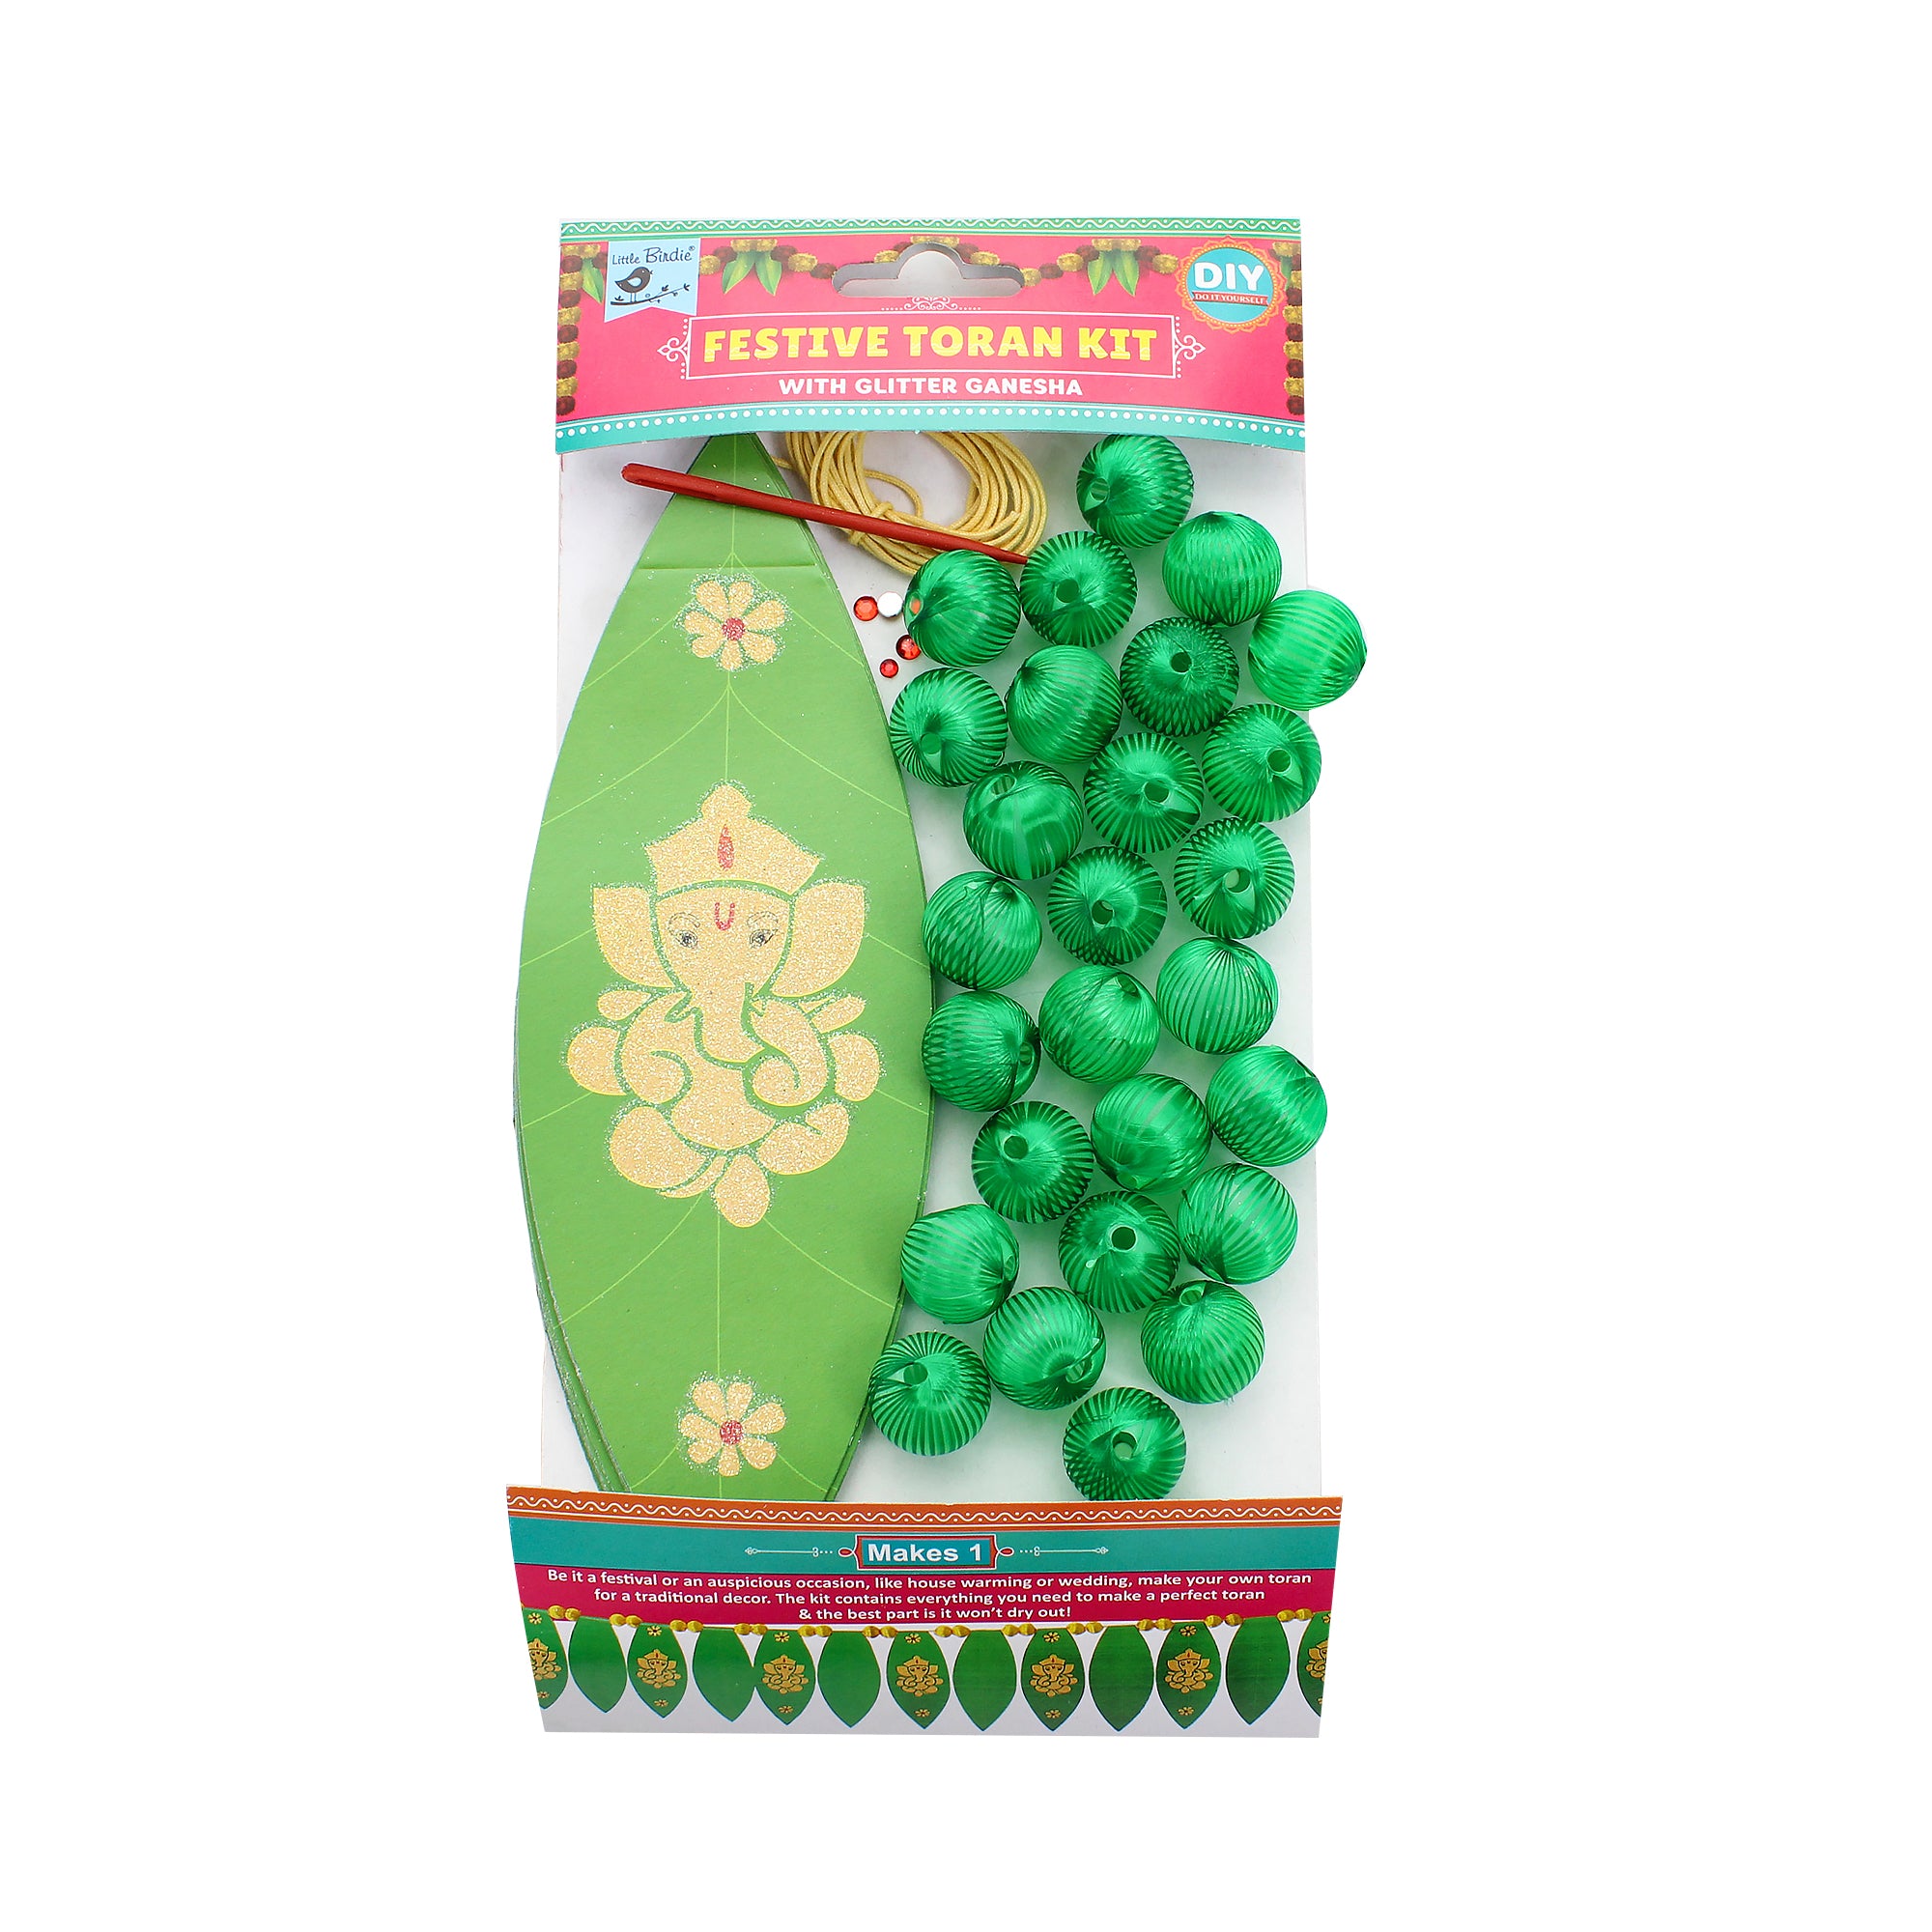 Festive Toran Kit With Glitter Ganesha - Assorted Color